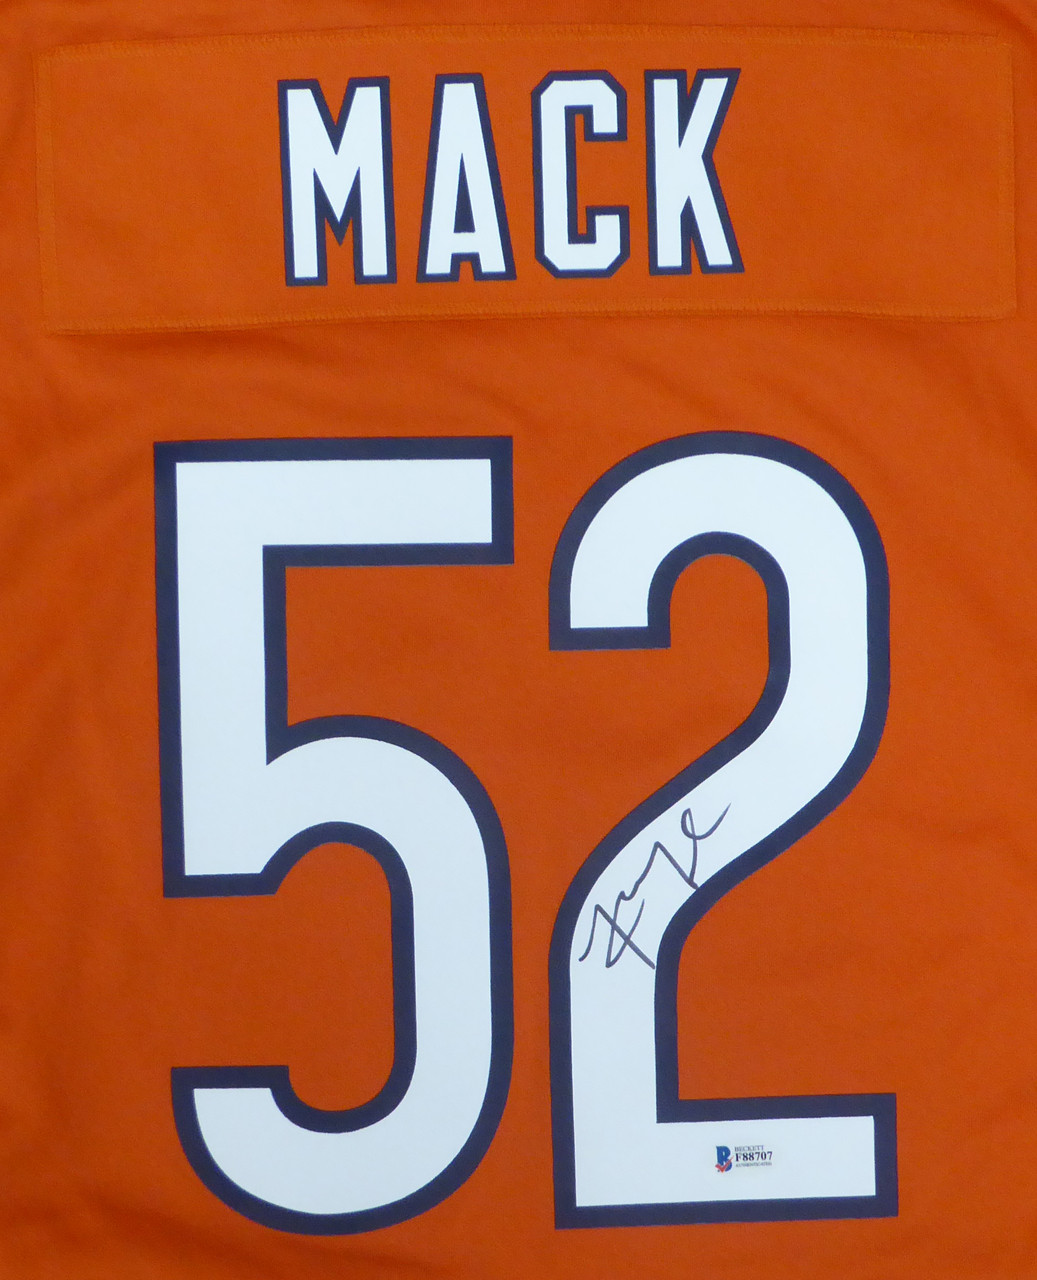 mack orange jersey